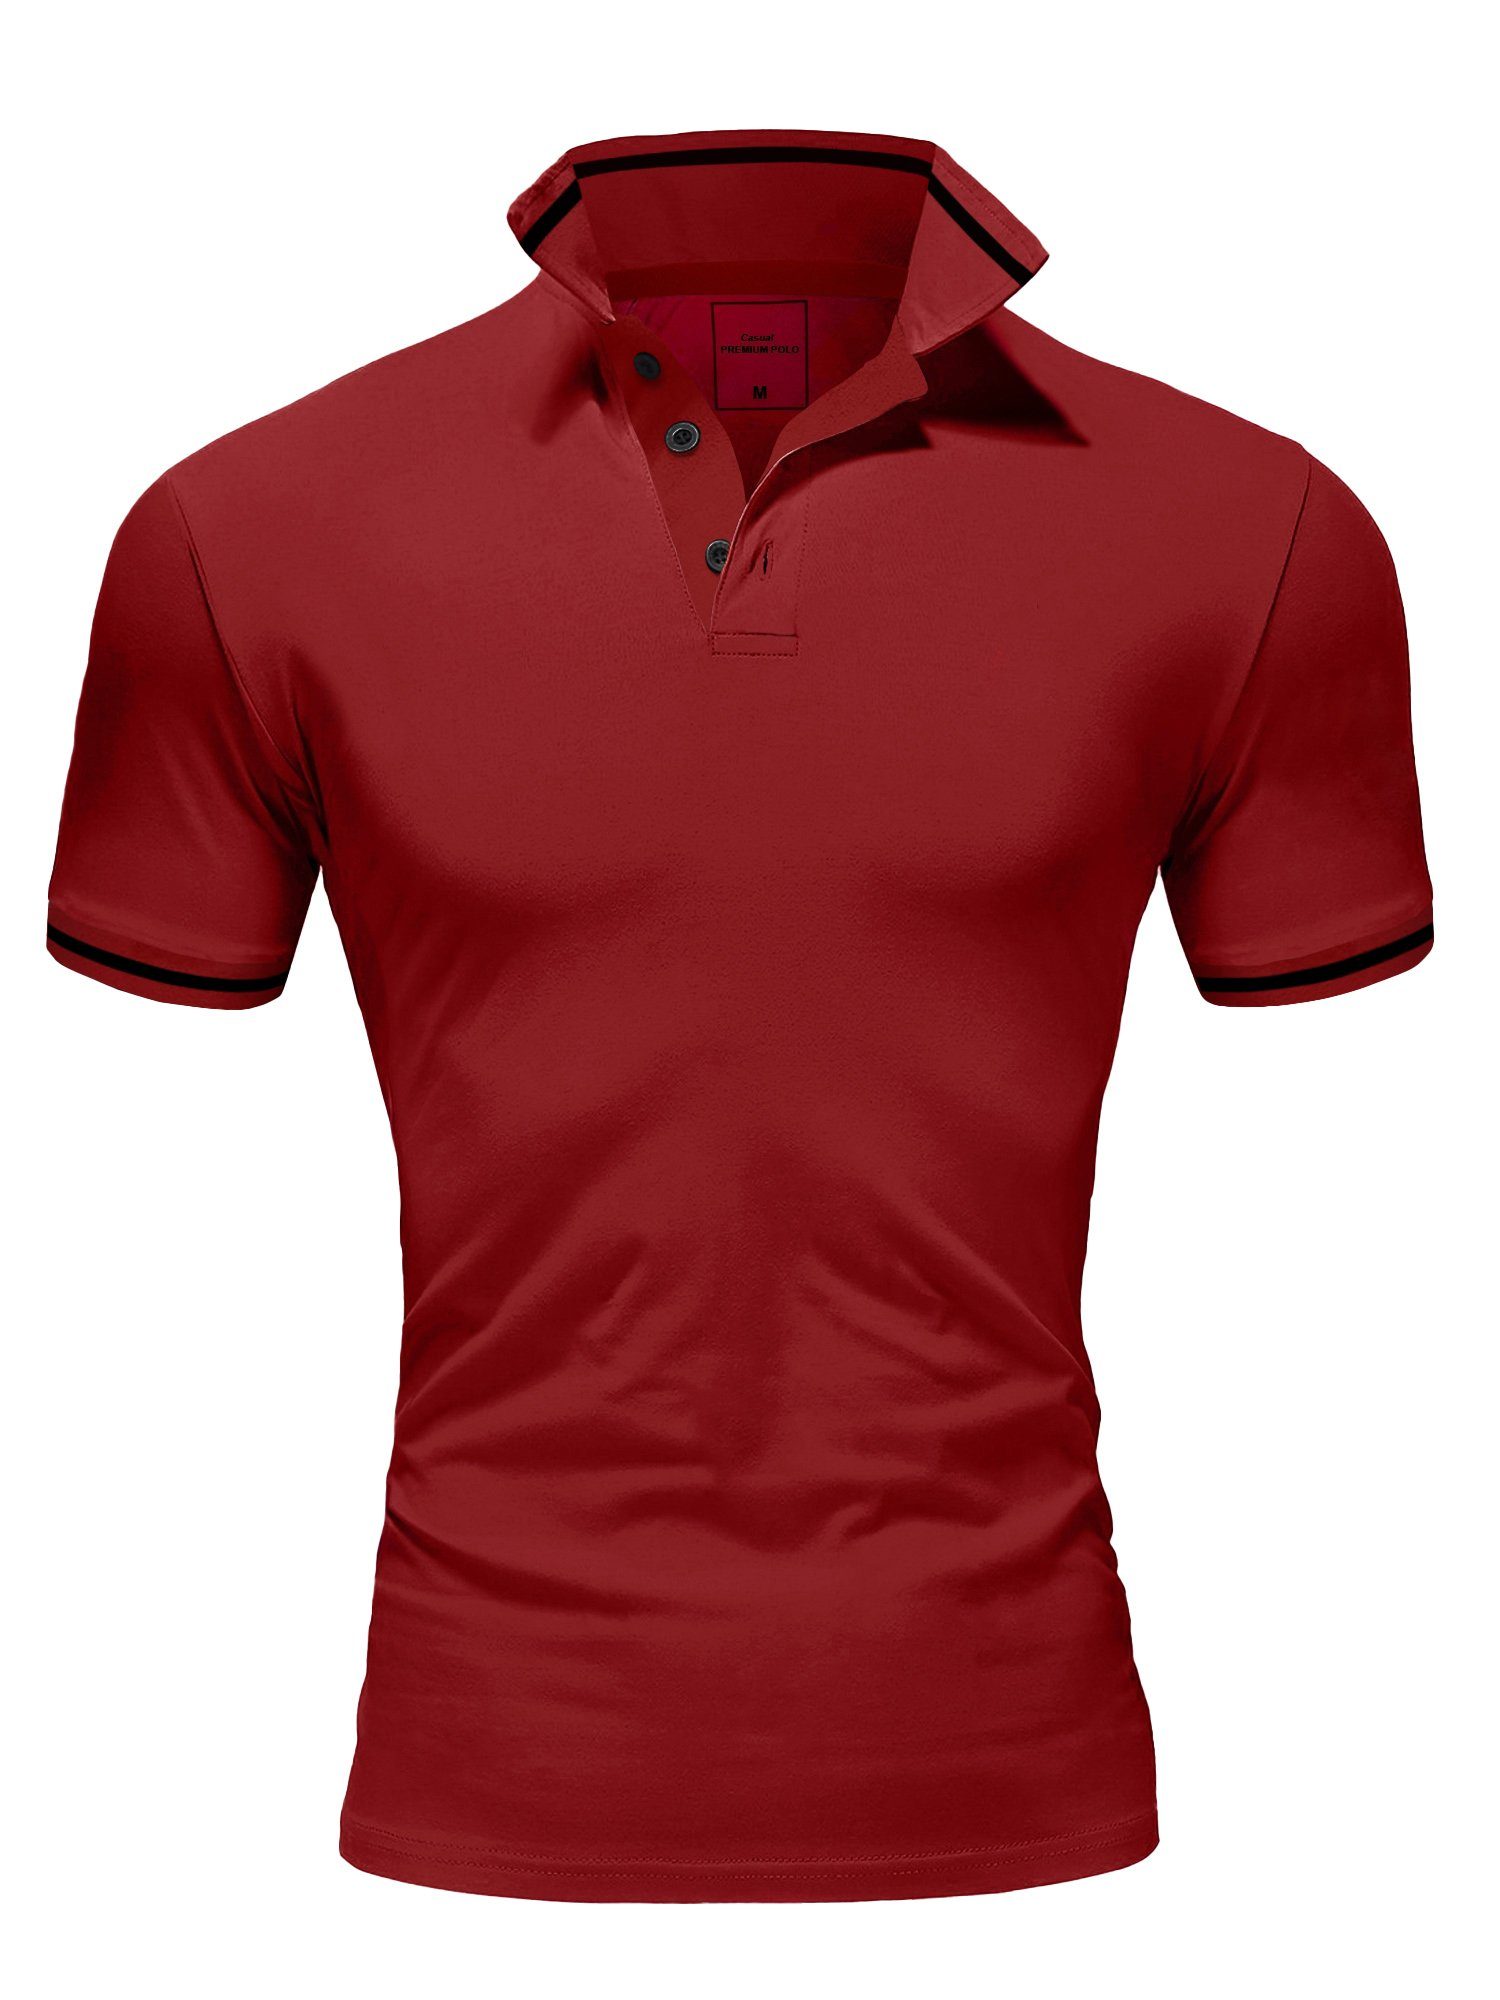 Bordeaux/Schwarz PROVIDENCE Polohemd Herren Poloshirt Basic Kontrast Amaci&Sons Kurzarm T-Shirt